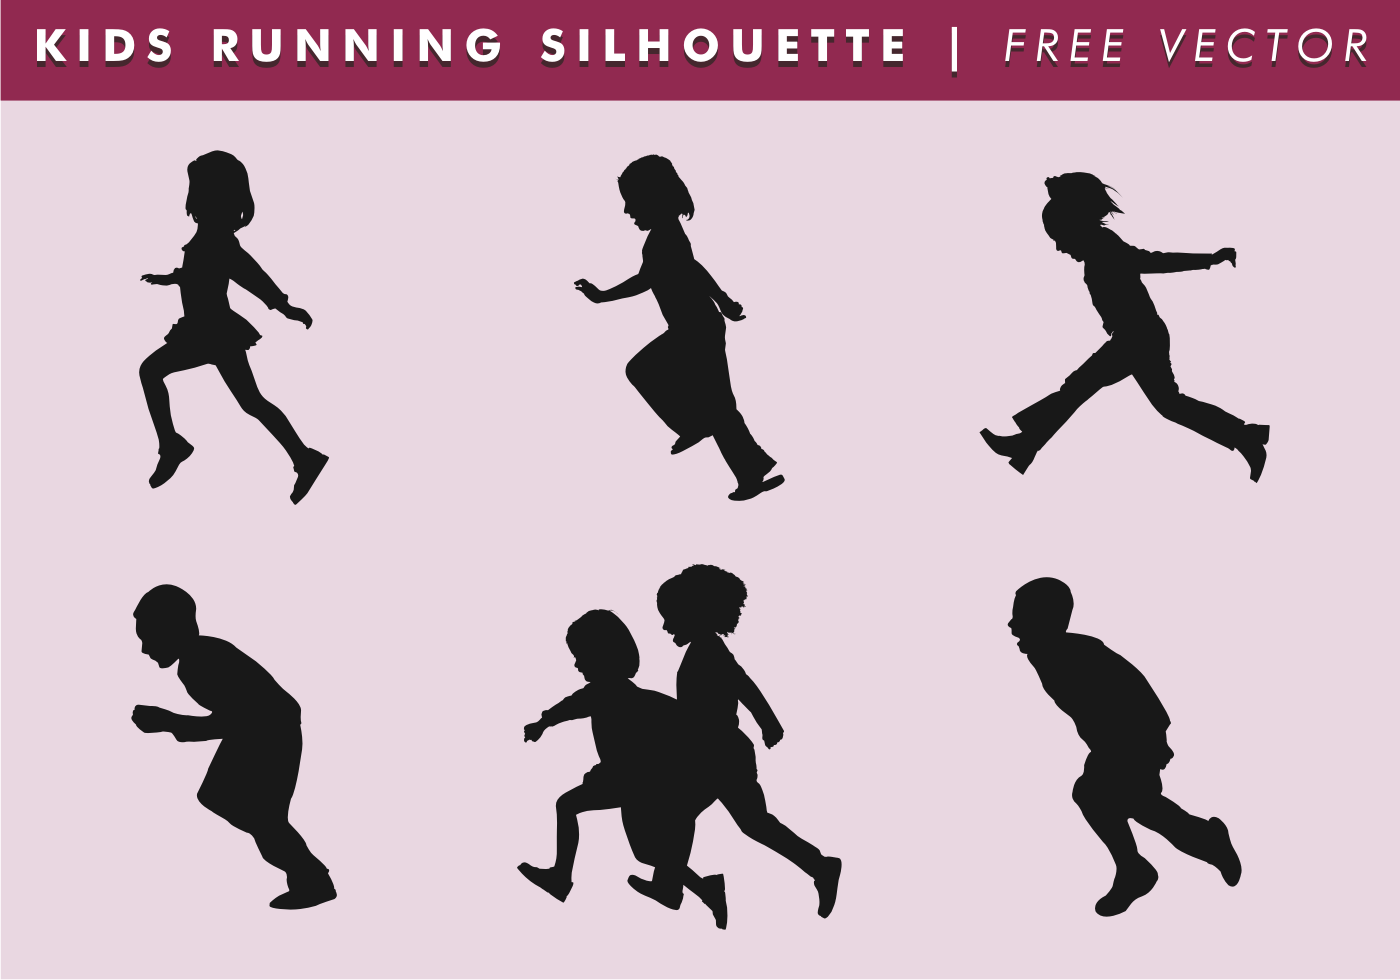 free clipart images children running - photo #45